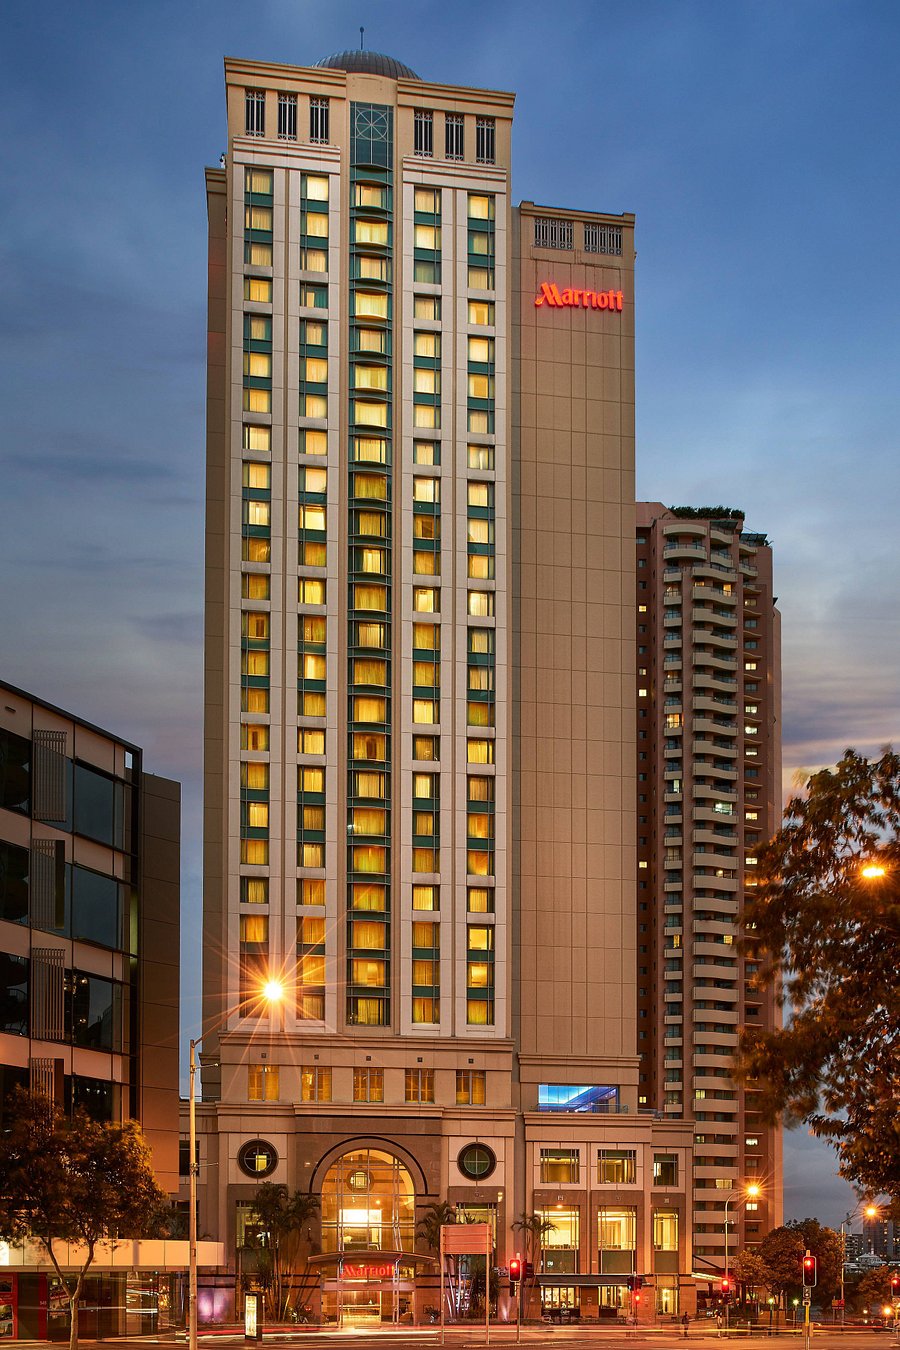 Marriott Hotel Brisbane Brisbane Australia